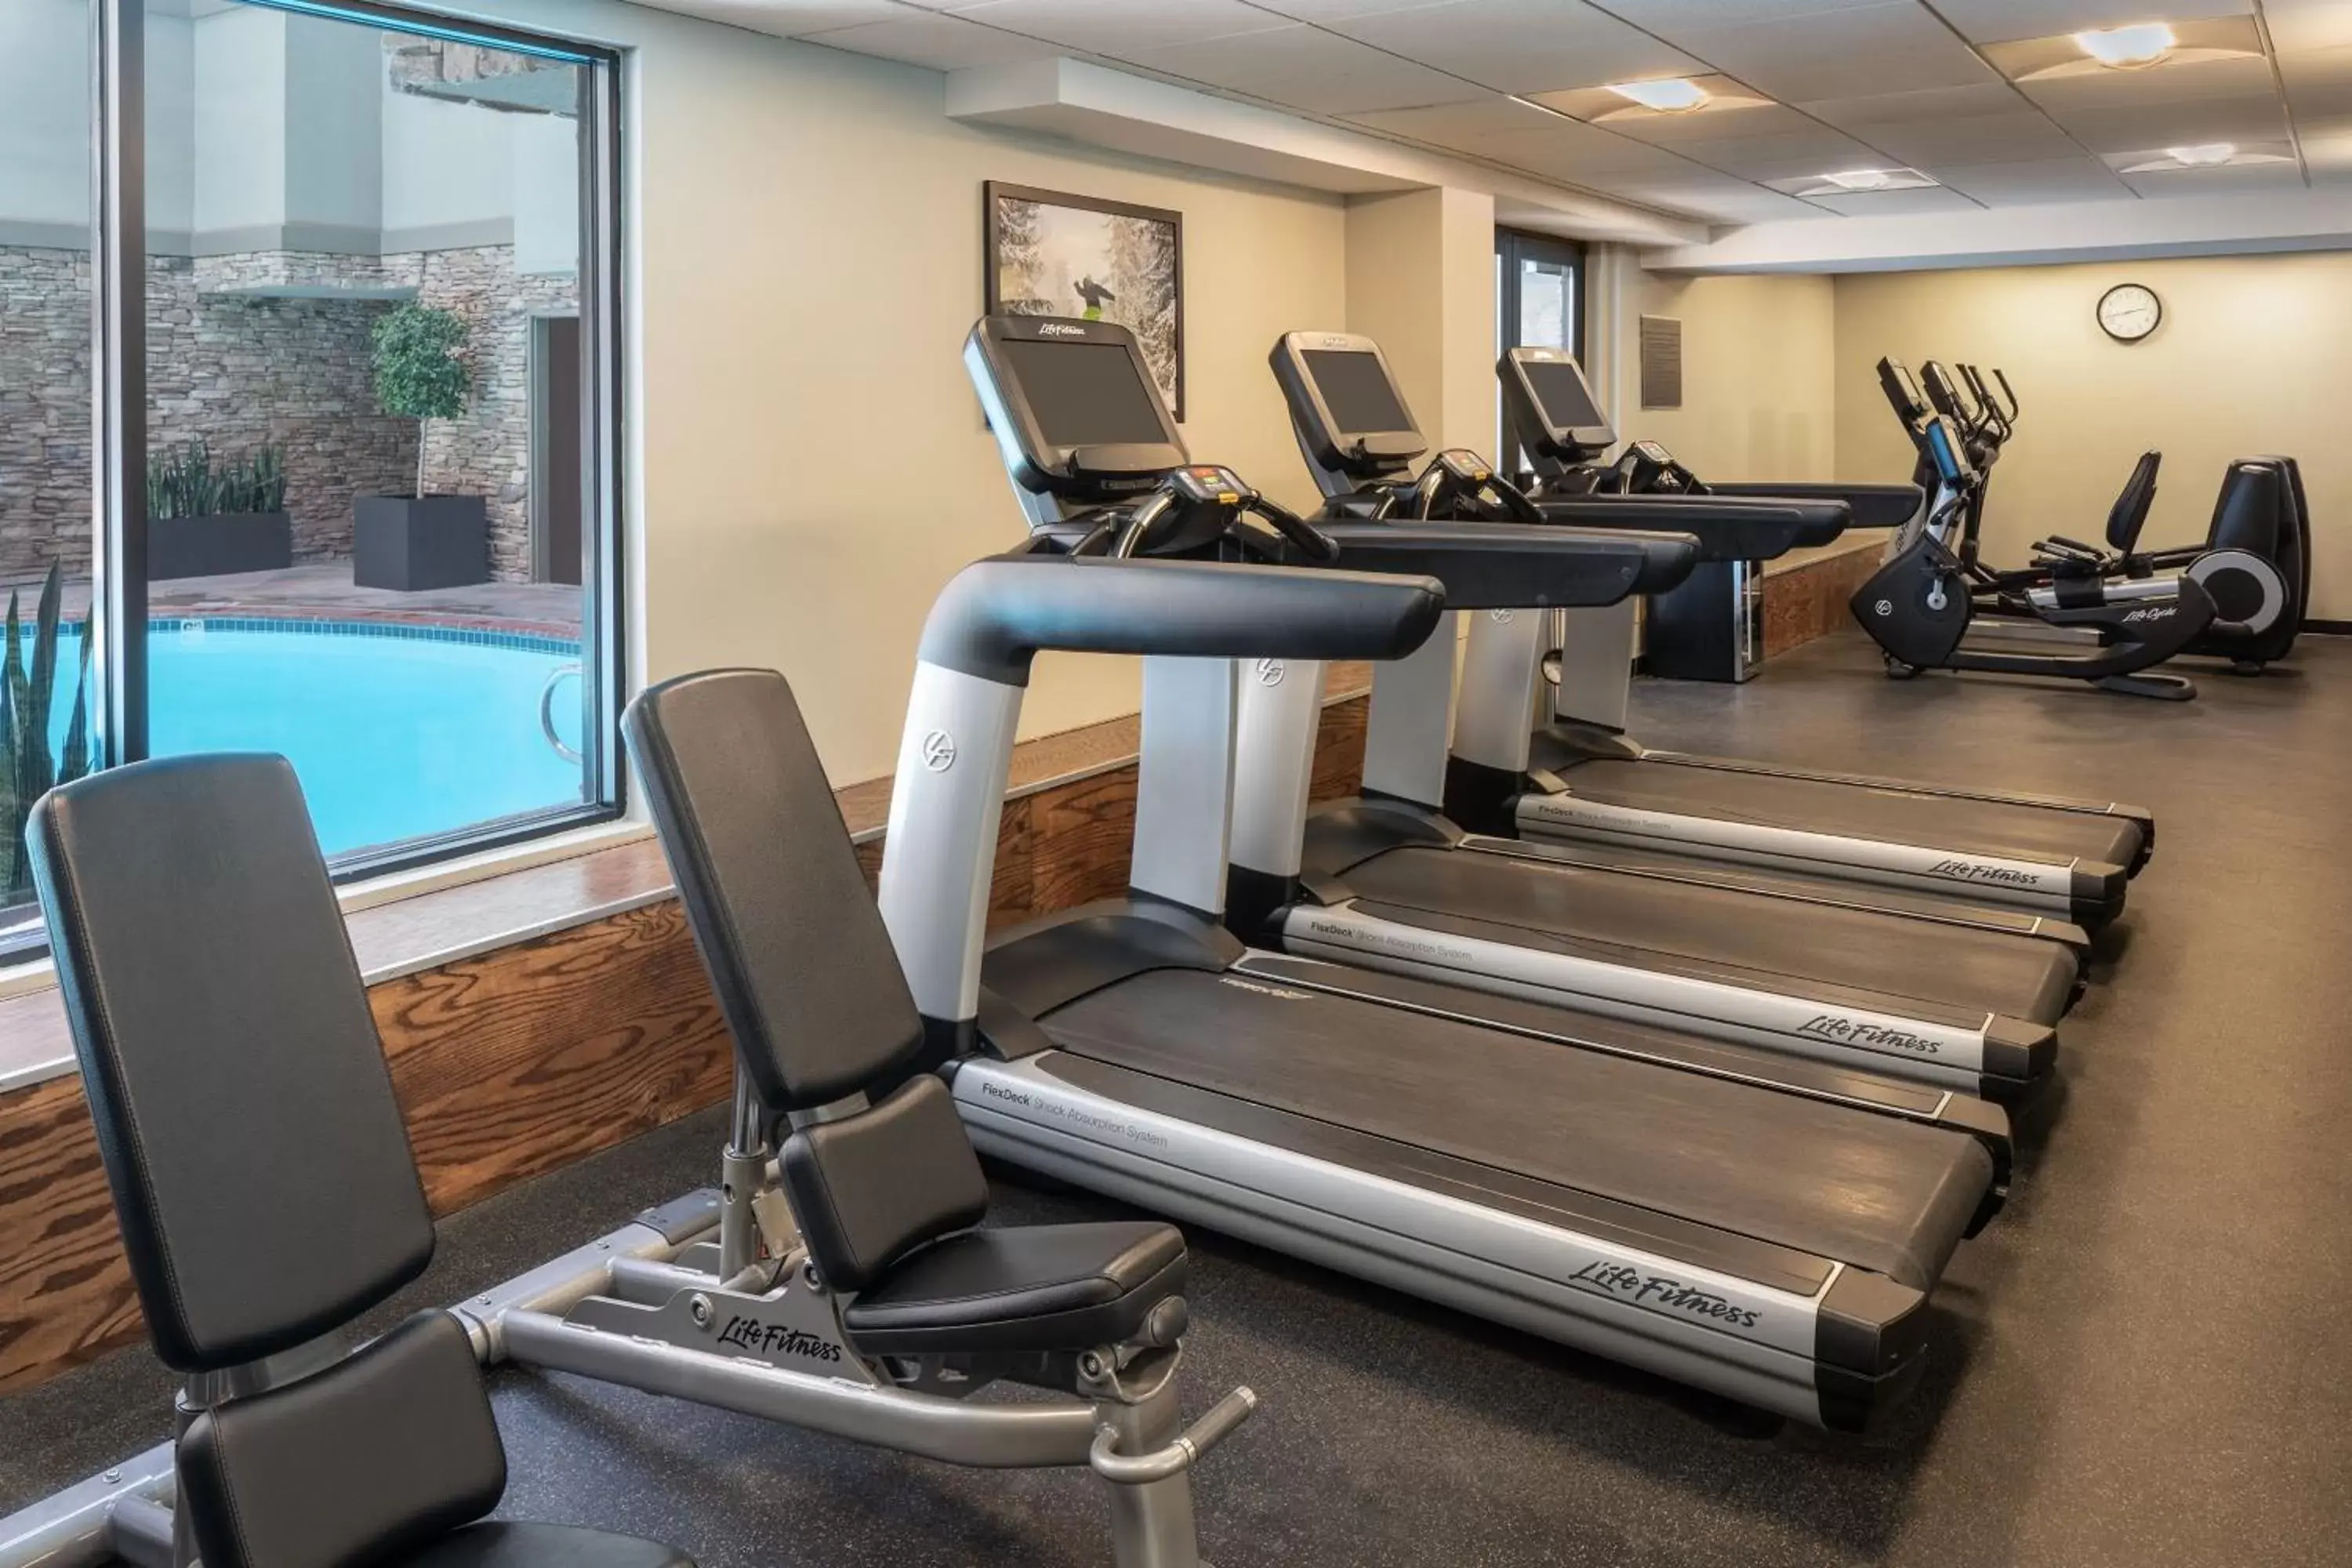 Fitness centre/facilities, Fitness Center/Facilities in Sheraton Park City